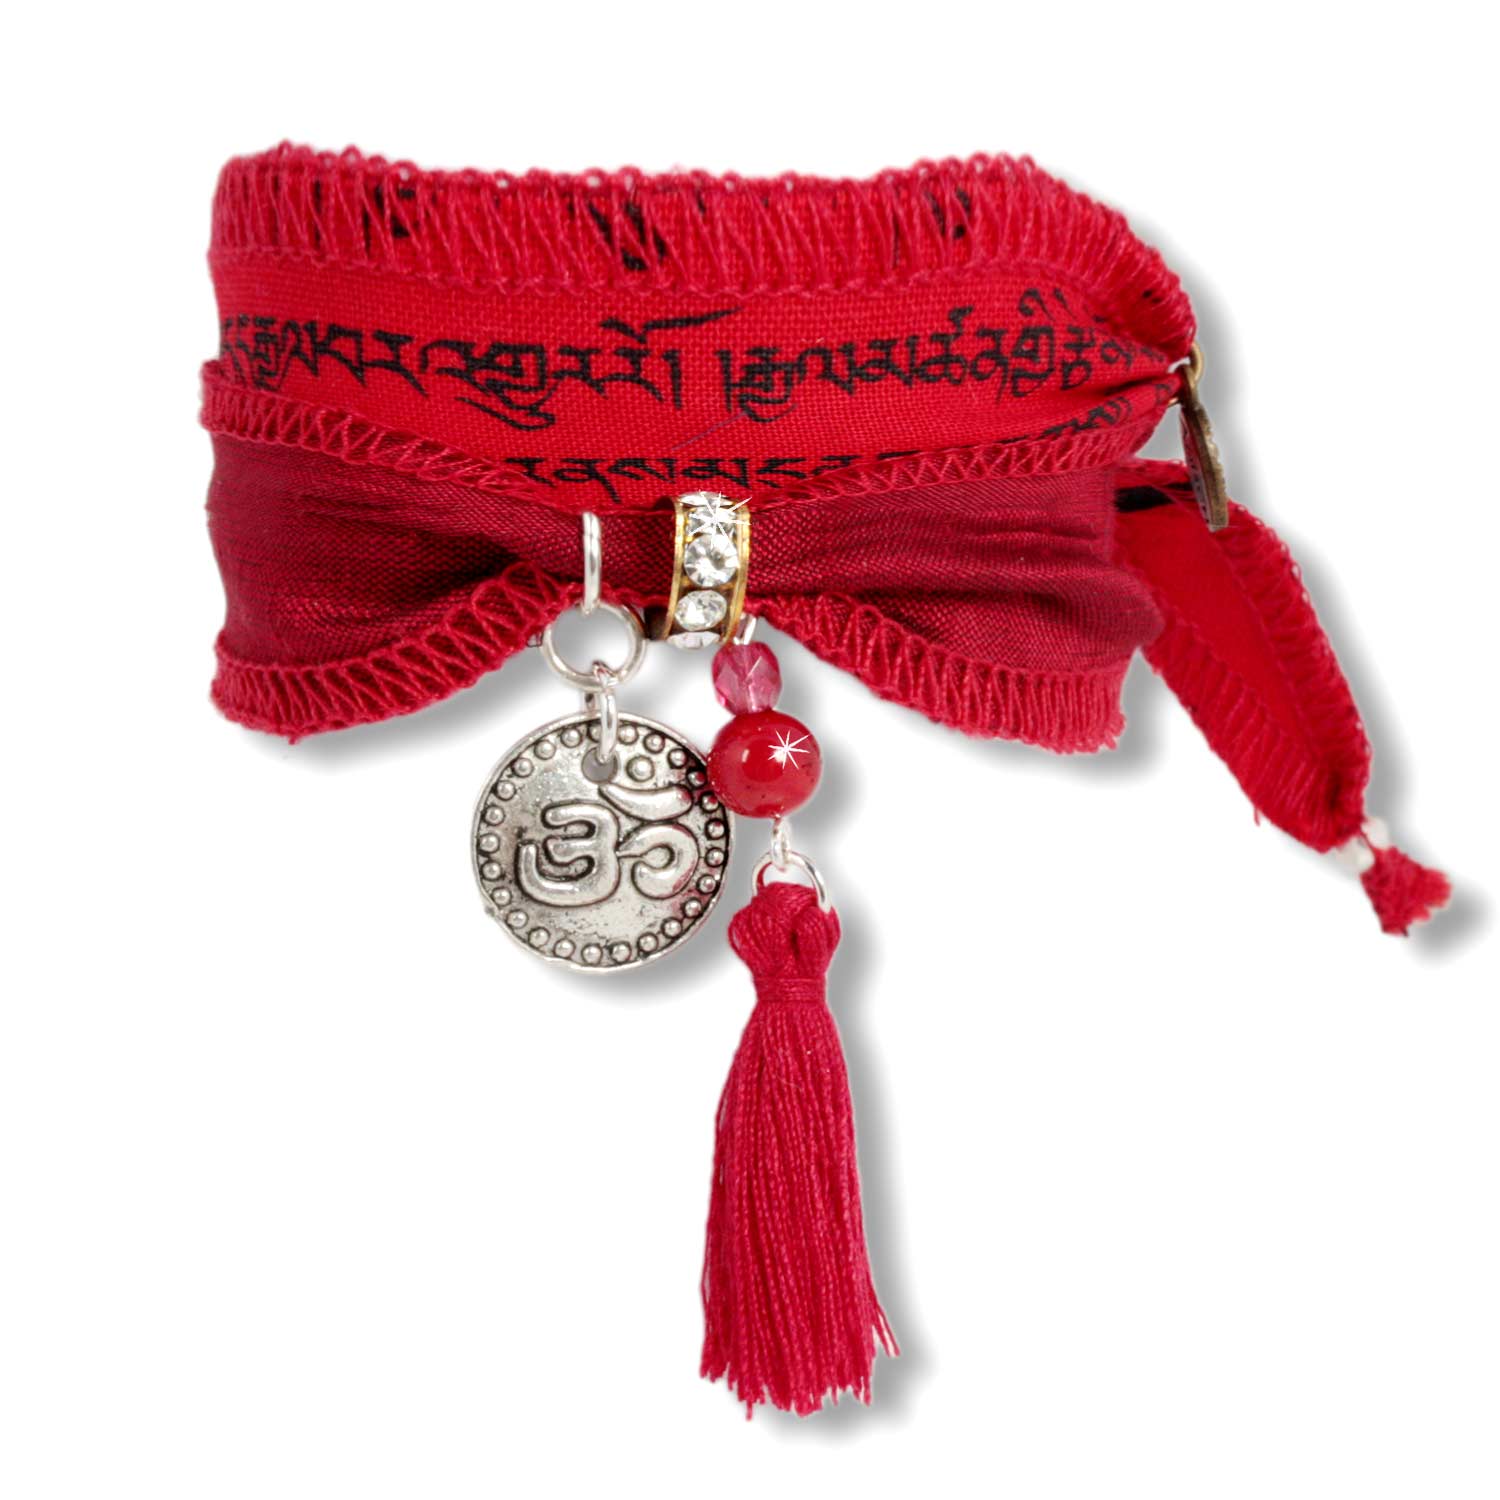 Fire Norbu - Tibetan Wish bracelet made of Tibetan prayer flags with coral